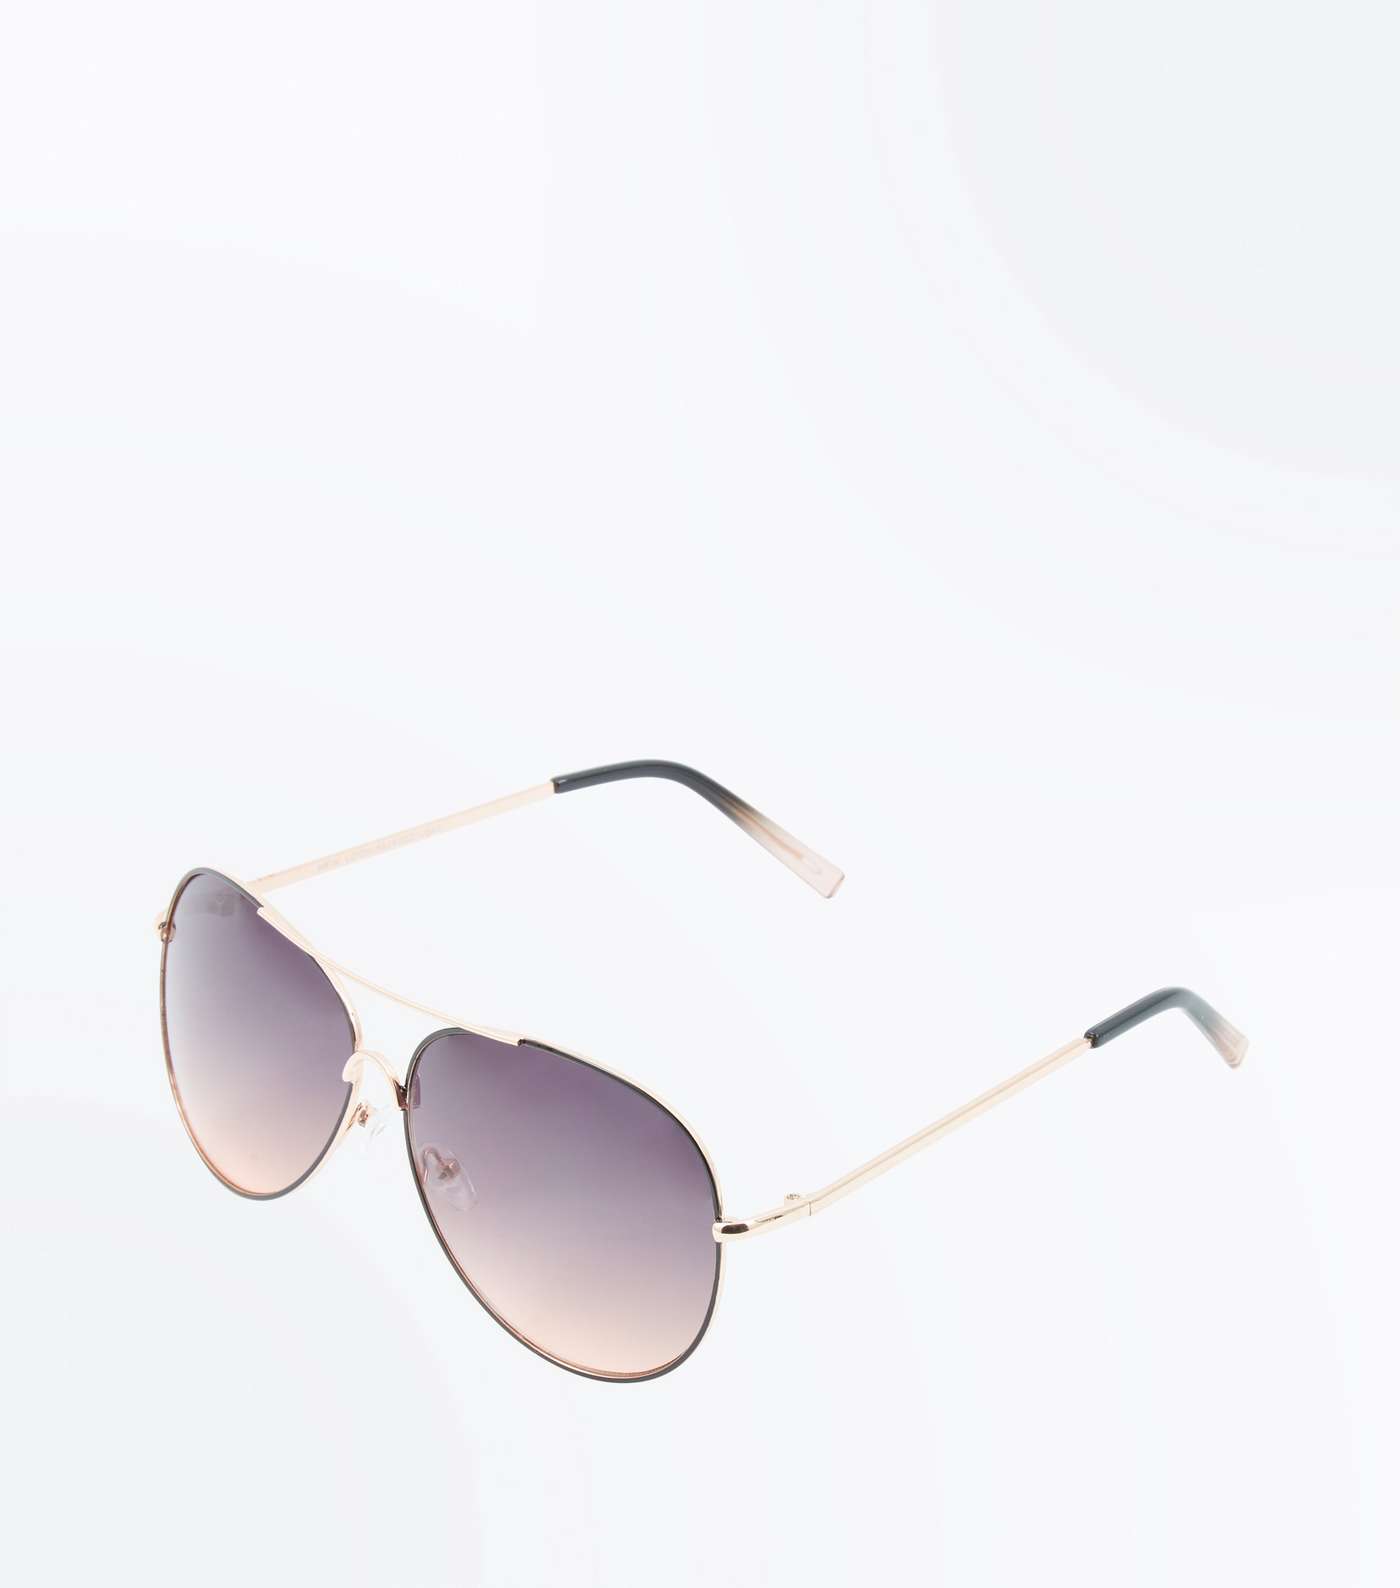 Black Ombré Aviator Style Sunglasses